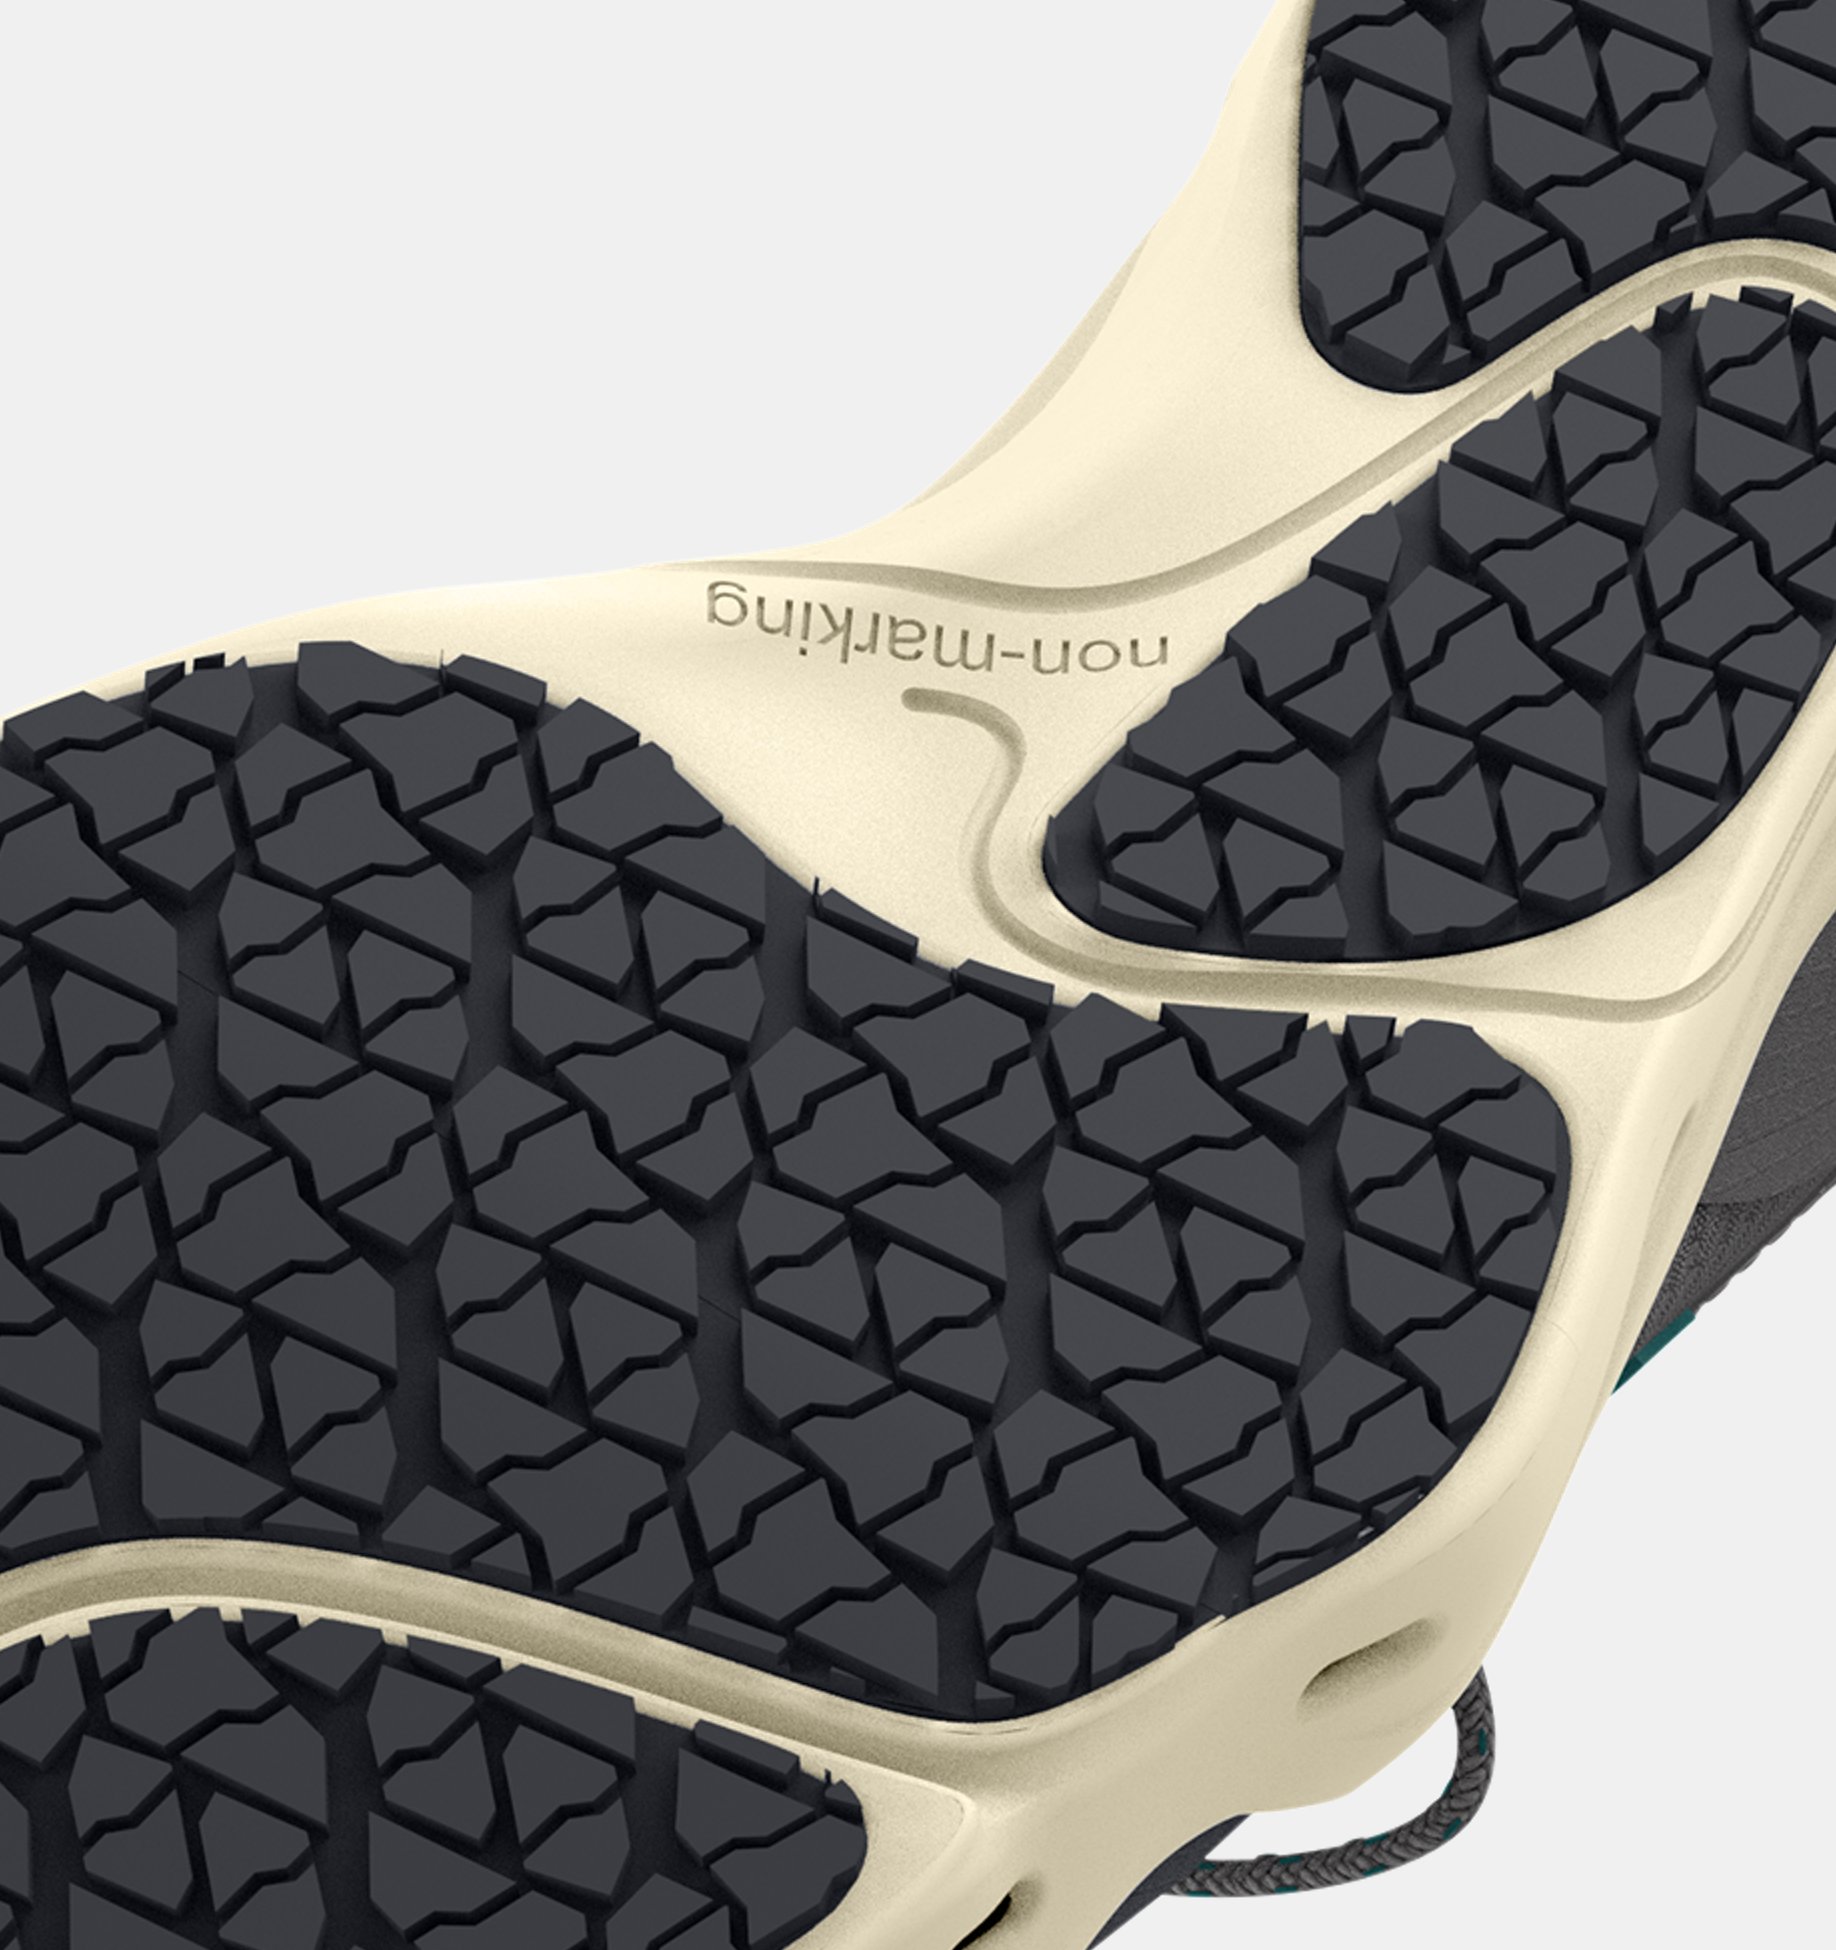 Under Armour Micro G Kilchis Sneakers for Men - Mod Grey/UA Hydro Camo - 8M